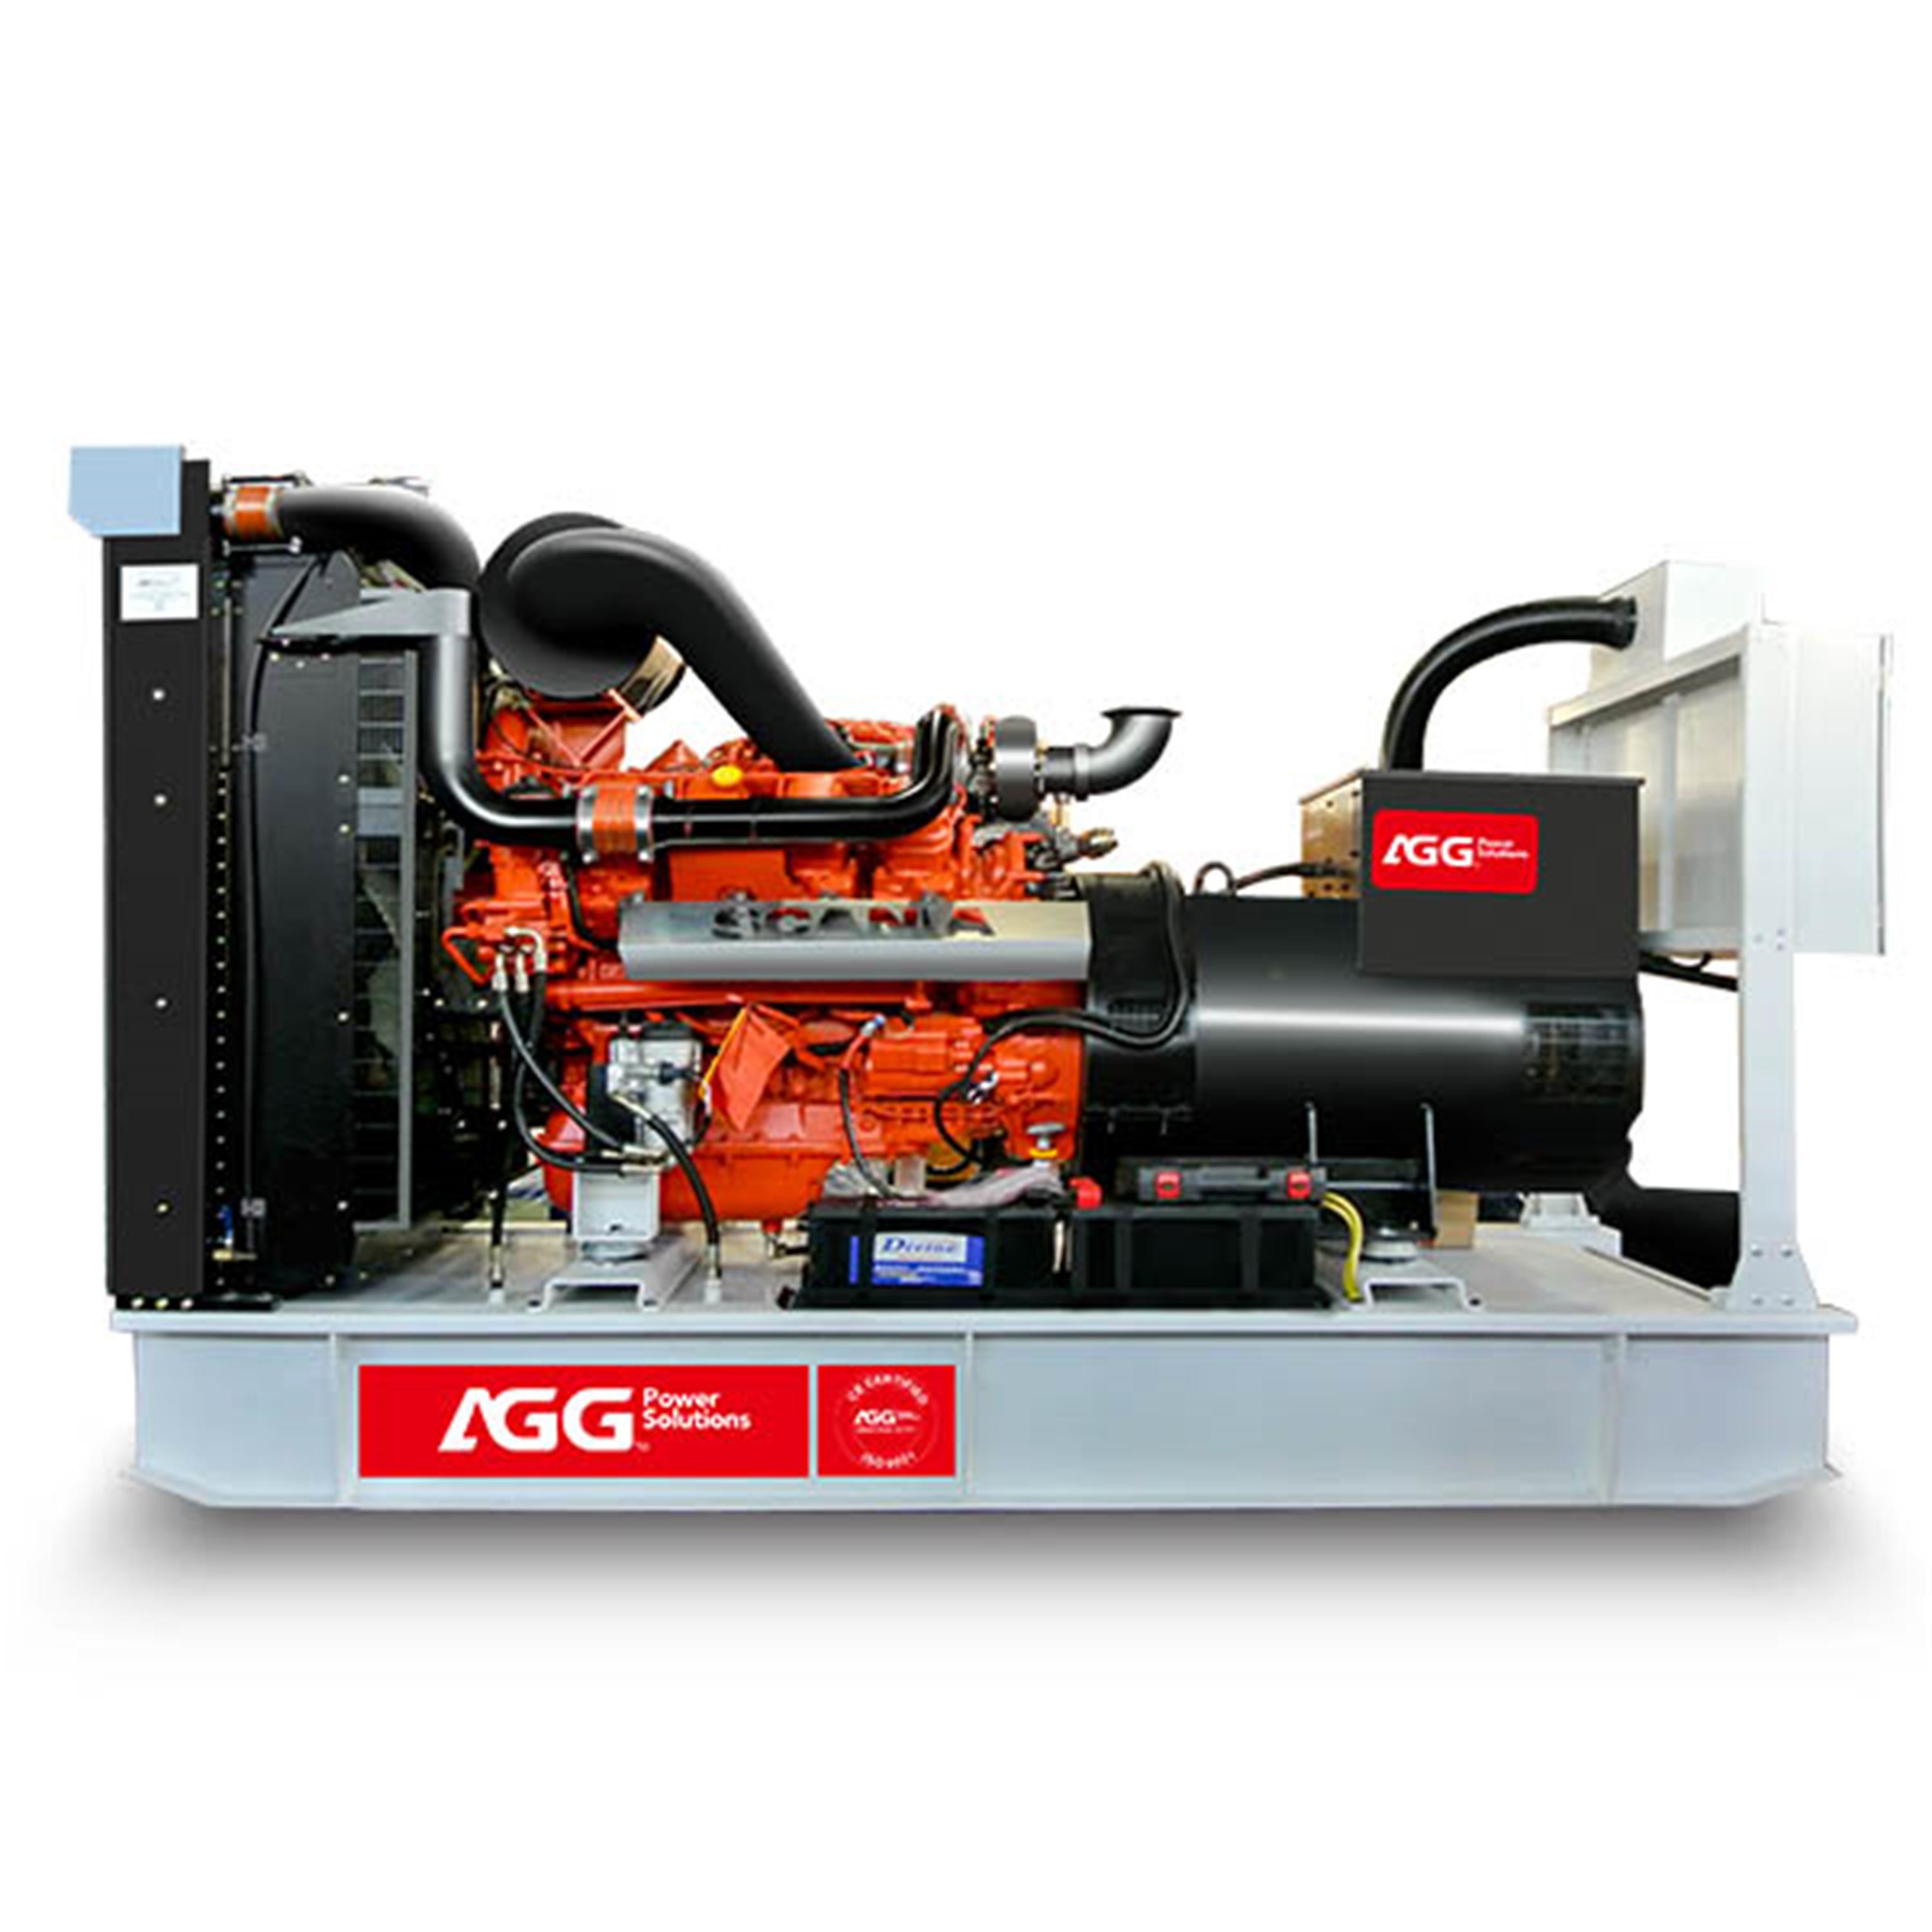 S400E5-50HZ - AGG Power Technology (UK) CO., LTD.